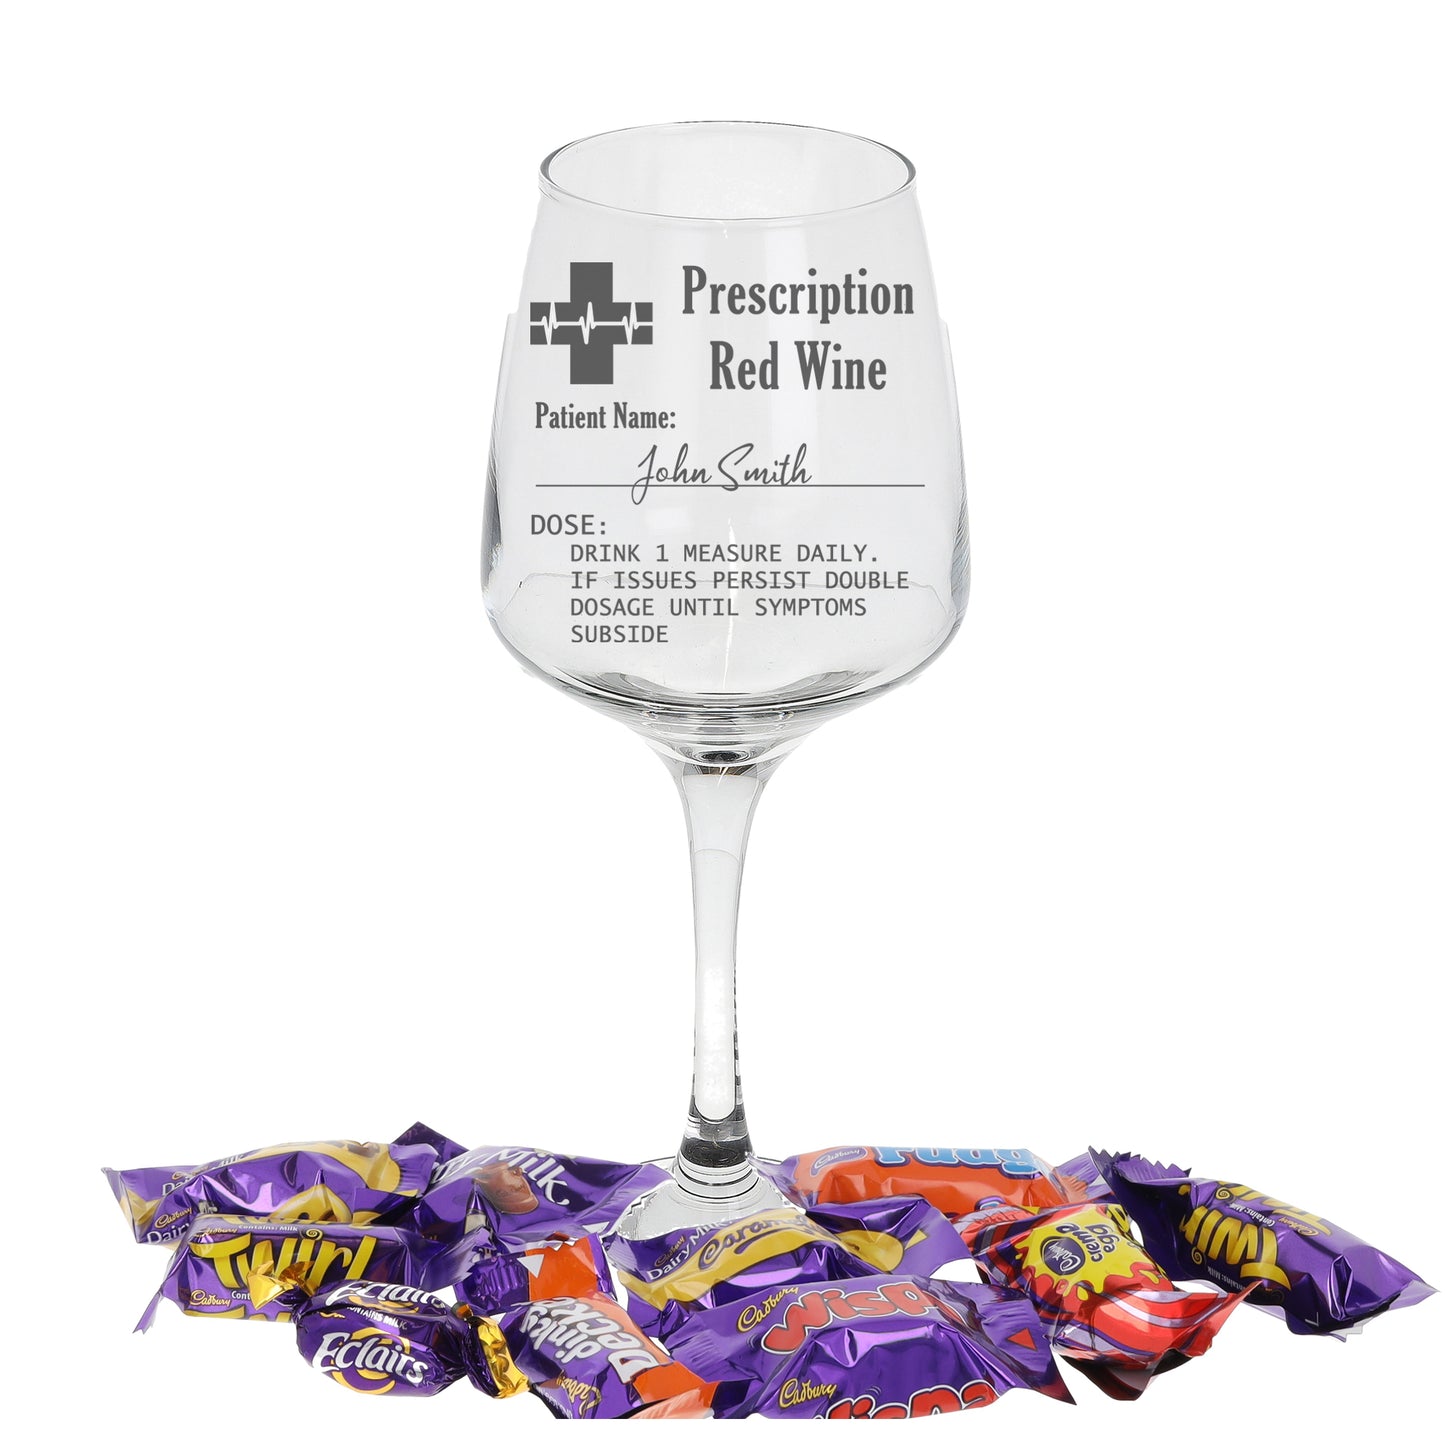 Personalised Engraved Prescription Wine Glass Gift  - Always Looking Good -   